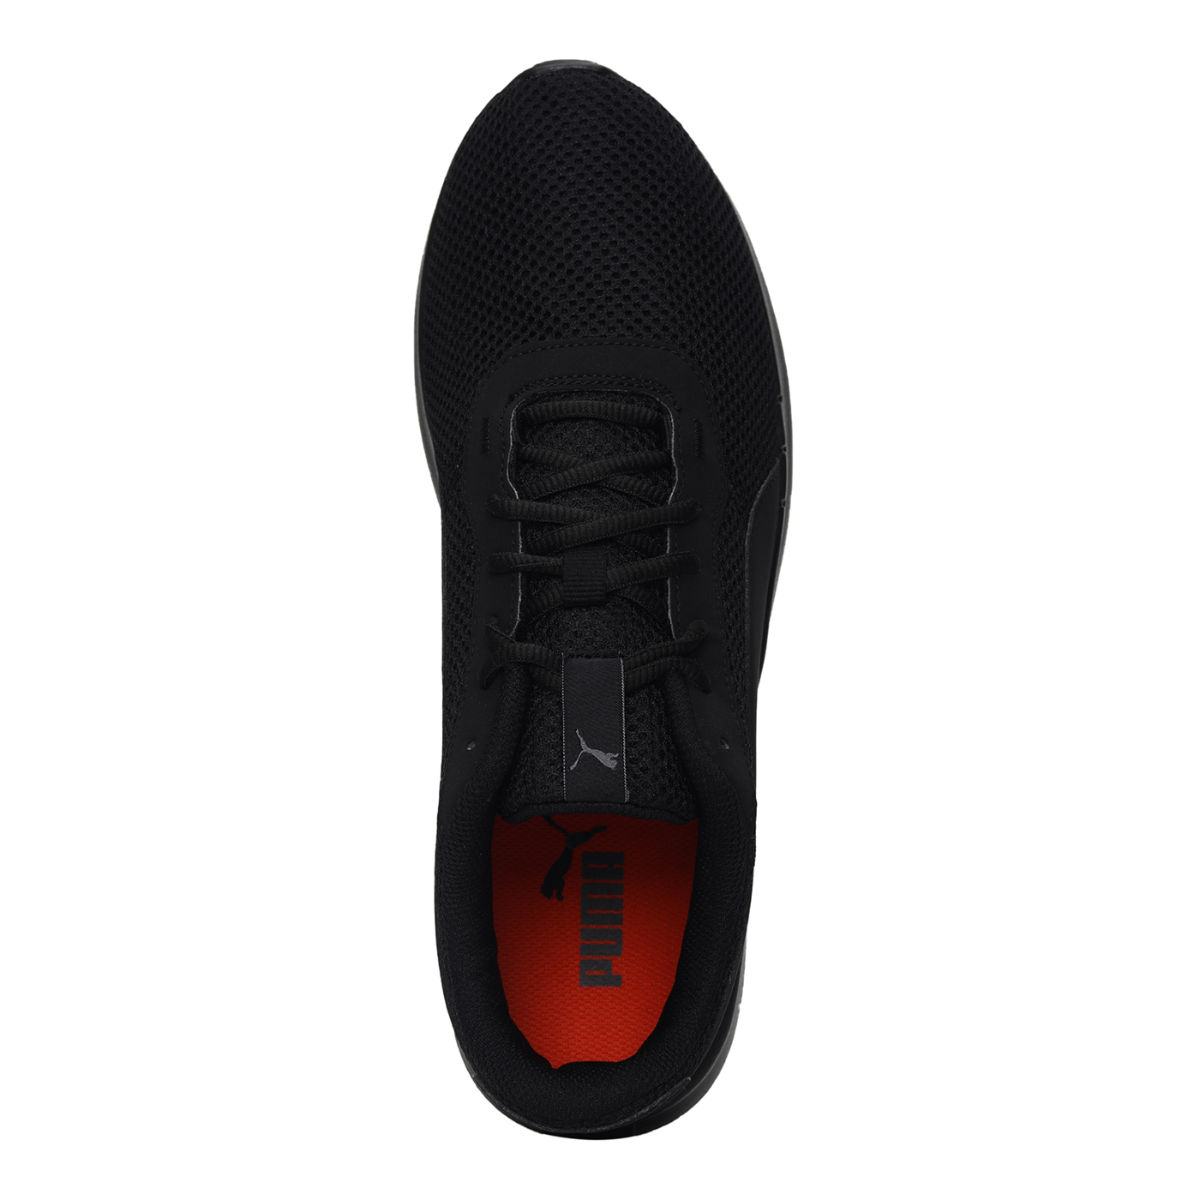 Puma Cliff Unisex Black Running Shoes (Uk 5): Buy Puma Cliff Unisex ...